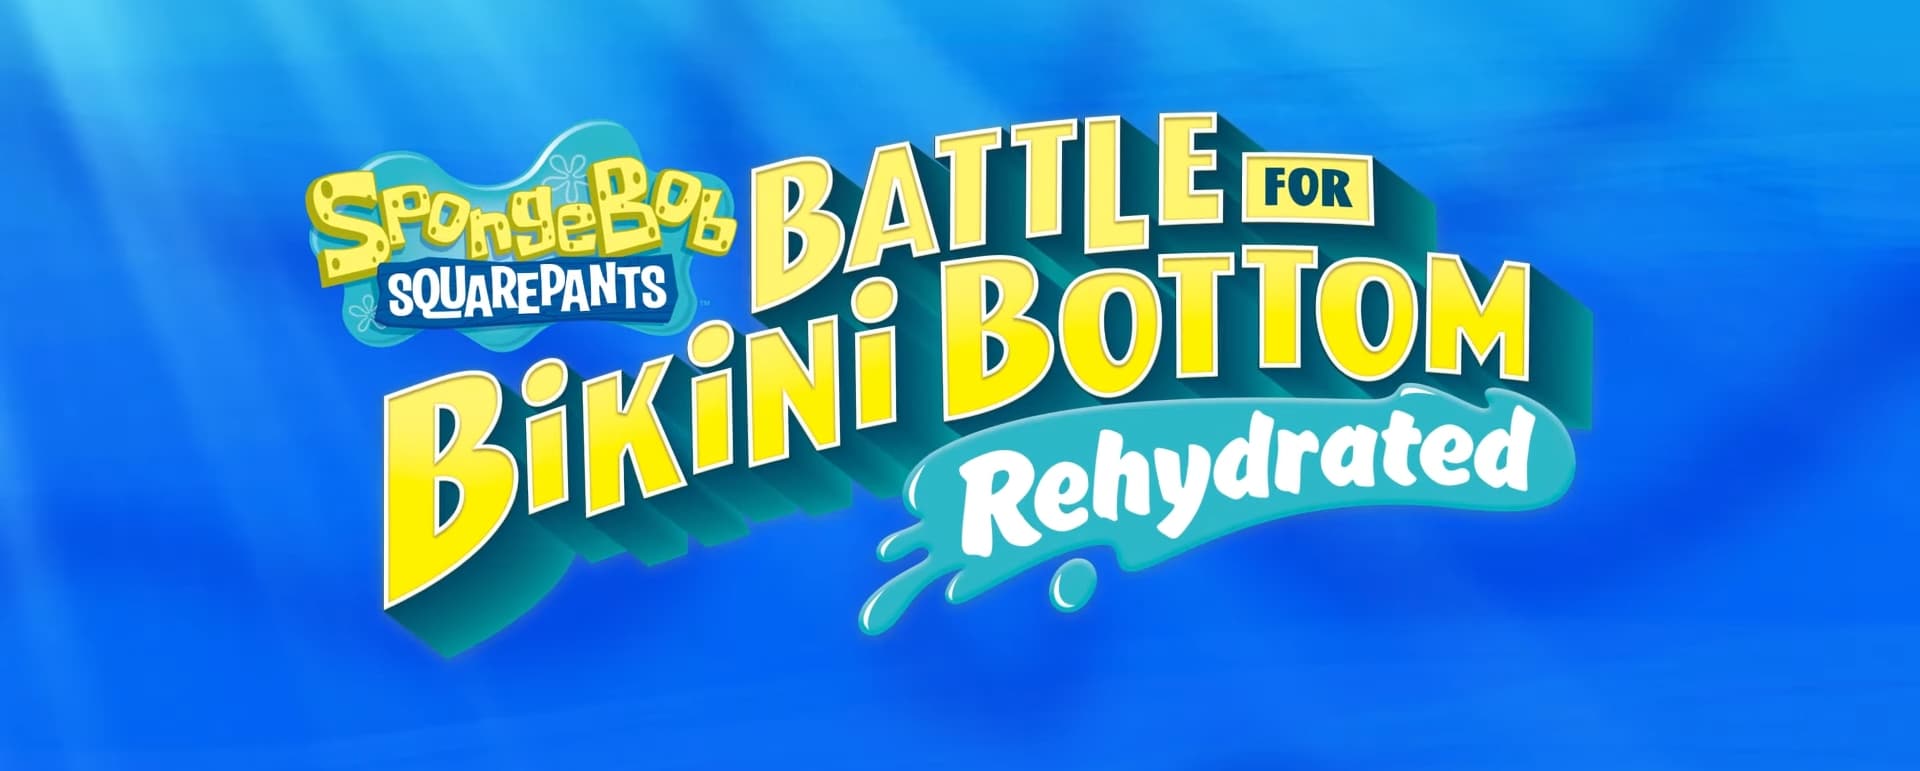 Spongebob SquarePants Battle for Bikini Bottom